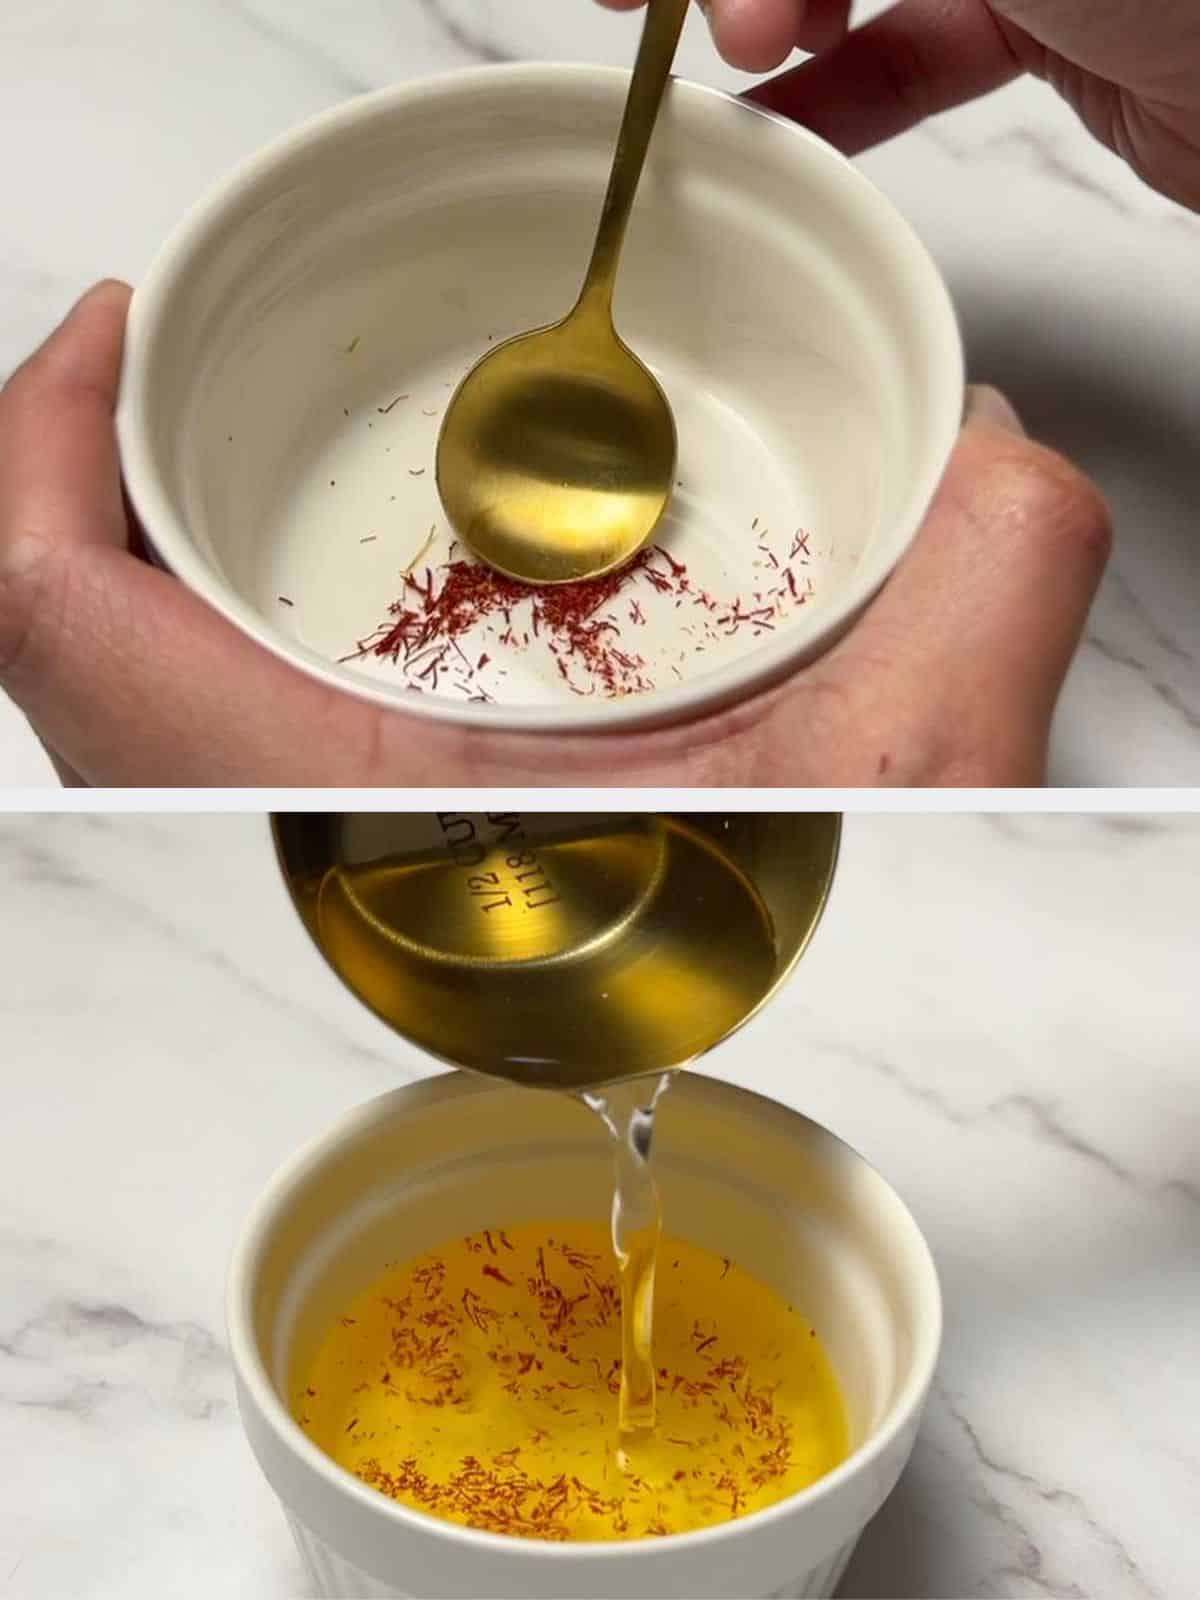 crushing saffron and adding water to it to make saffron water